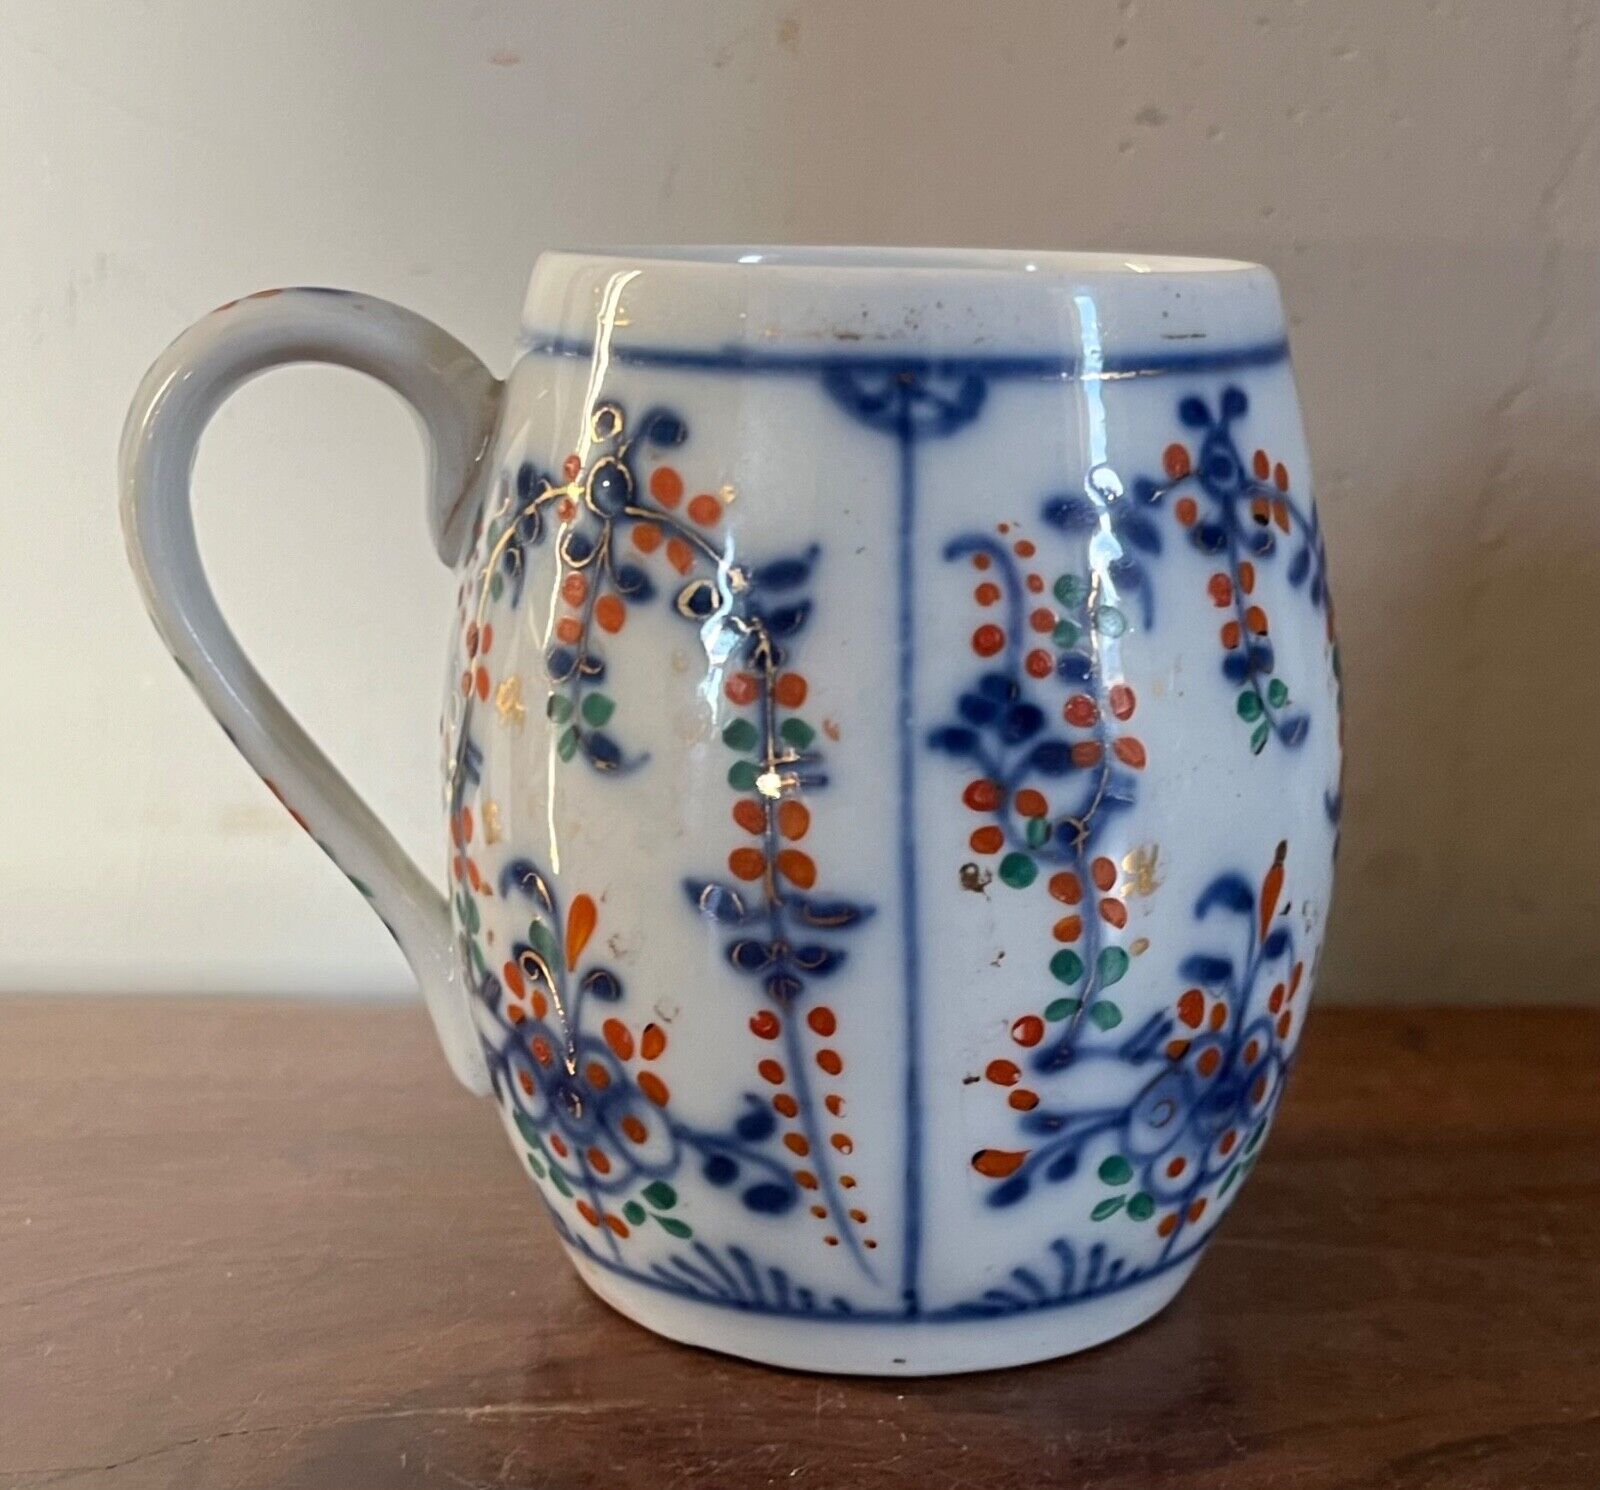 Antique 18th / 19th century German Porcelain Cup Mug Blue Onion Sprig Pattern